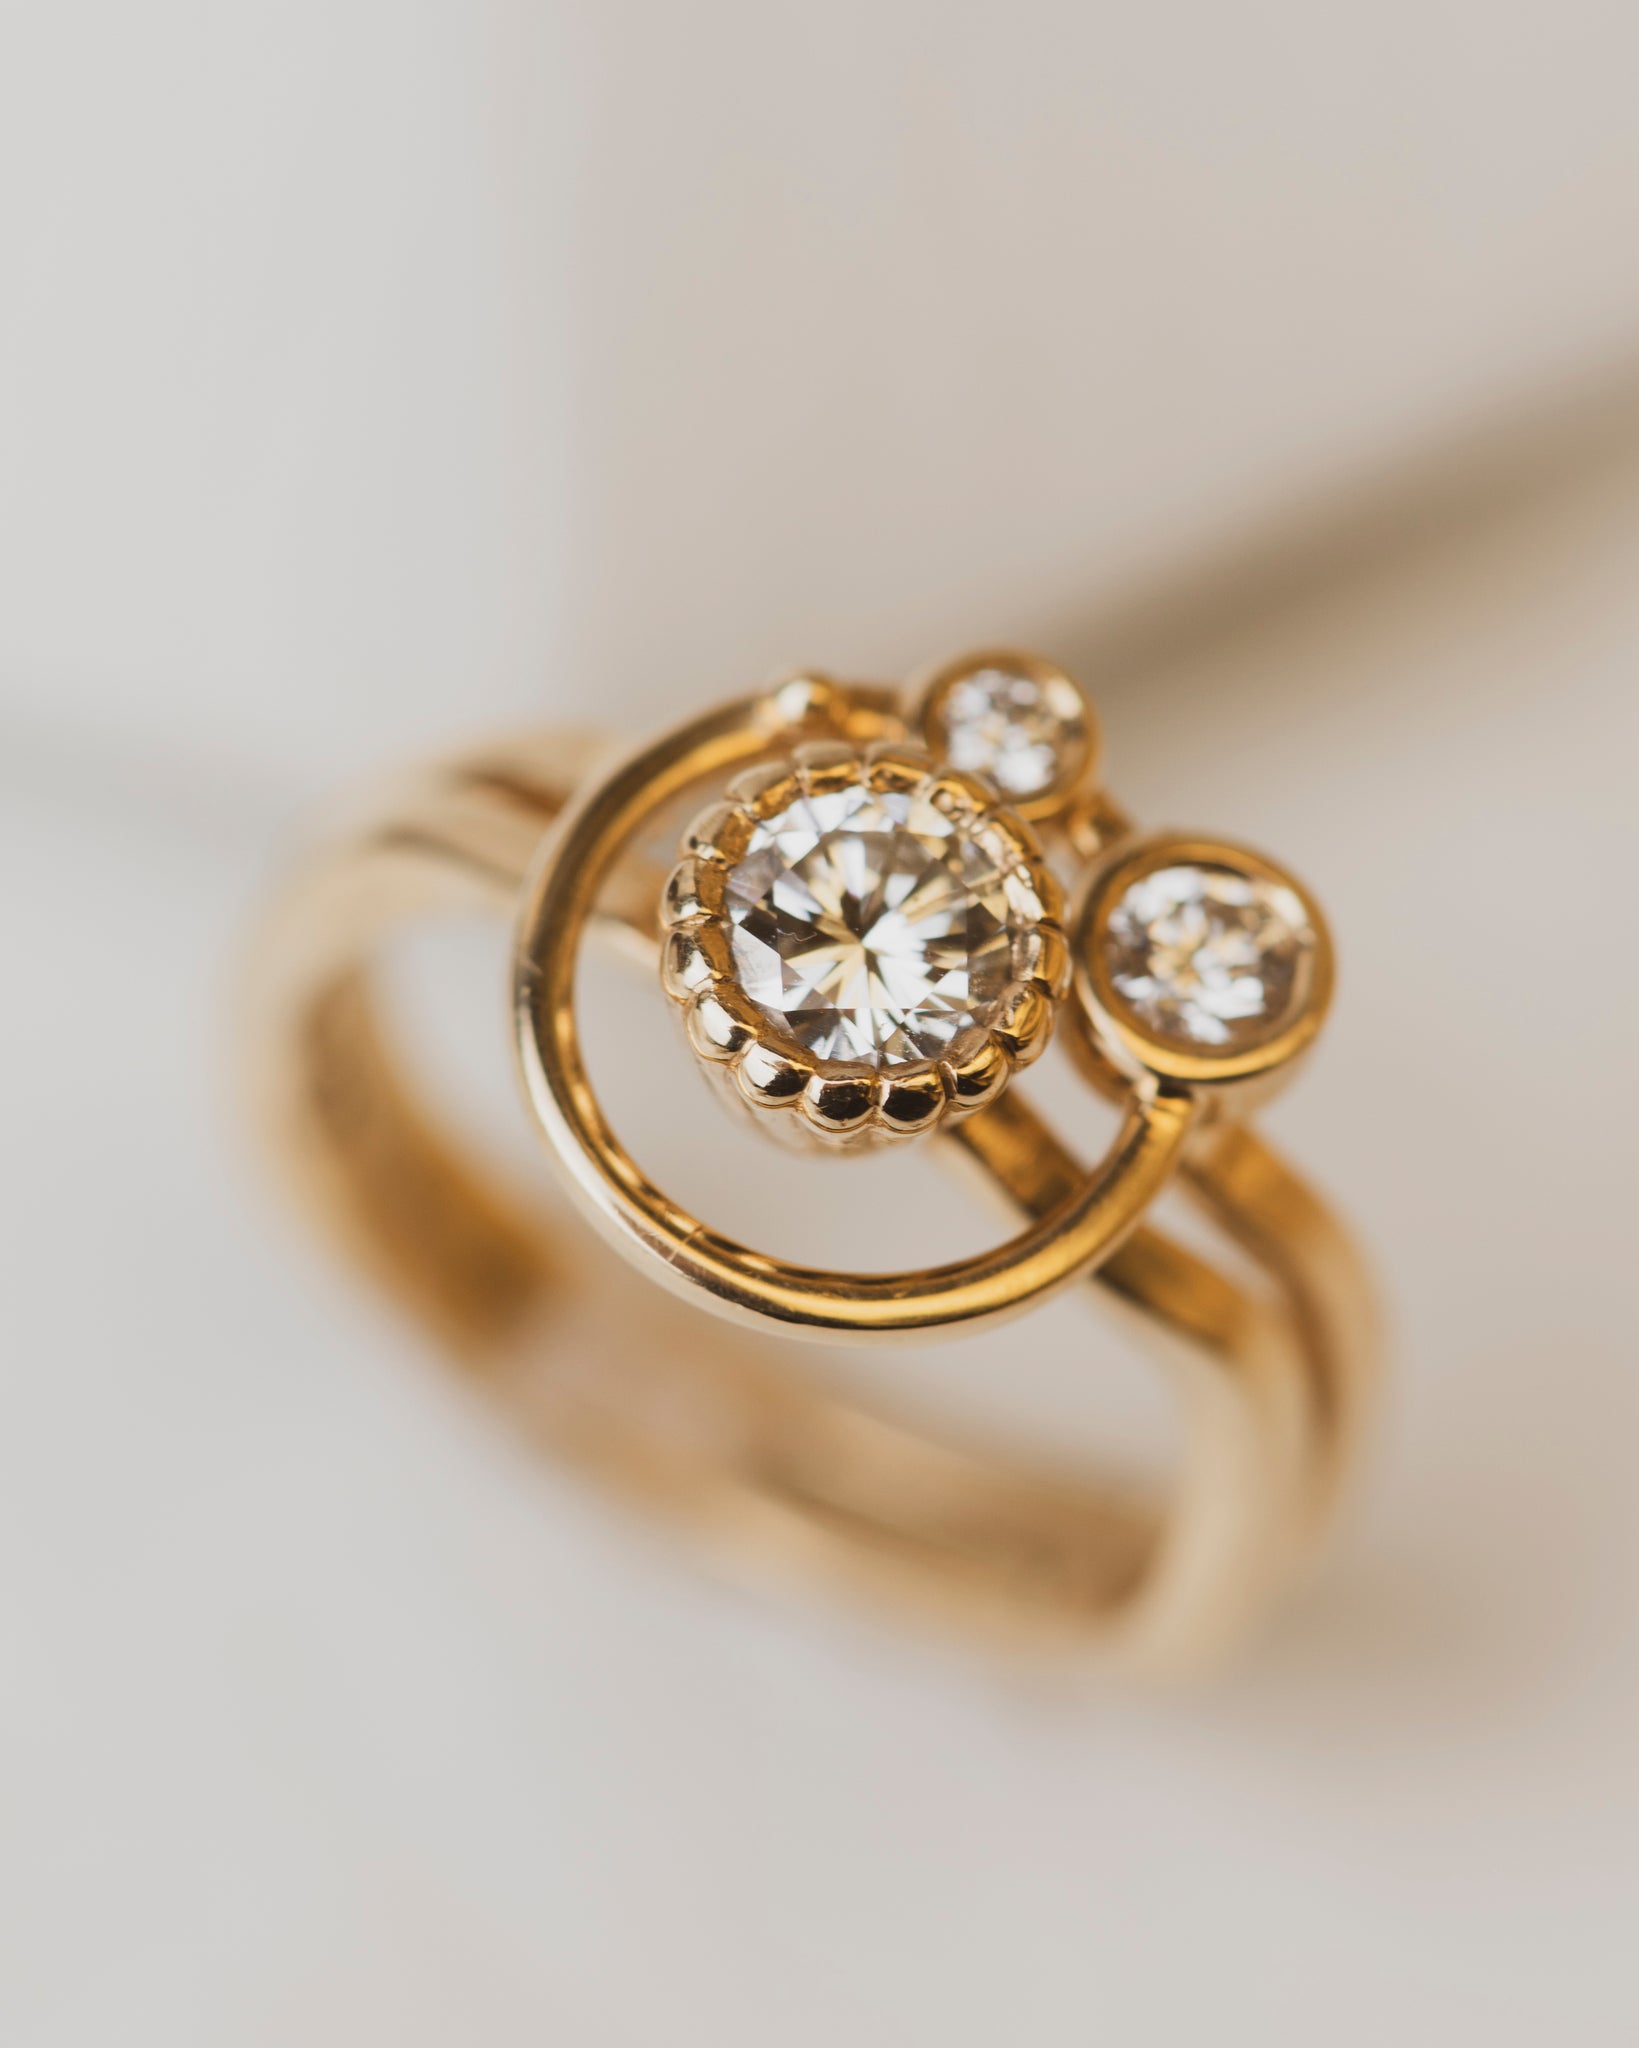 0.46 carat Bezel-set white diamond ring with accent diamond orbit band